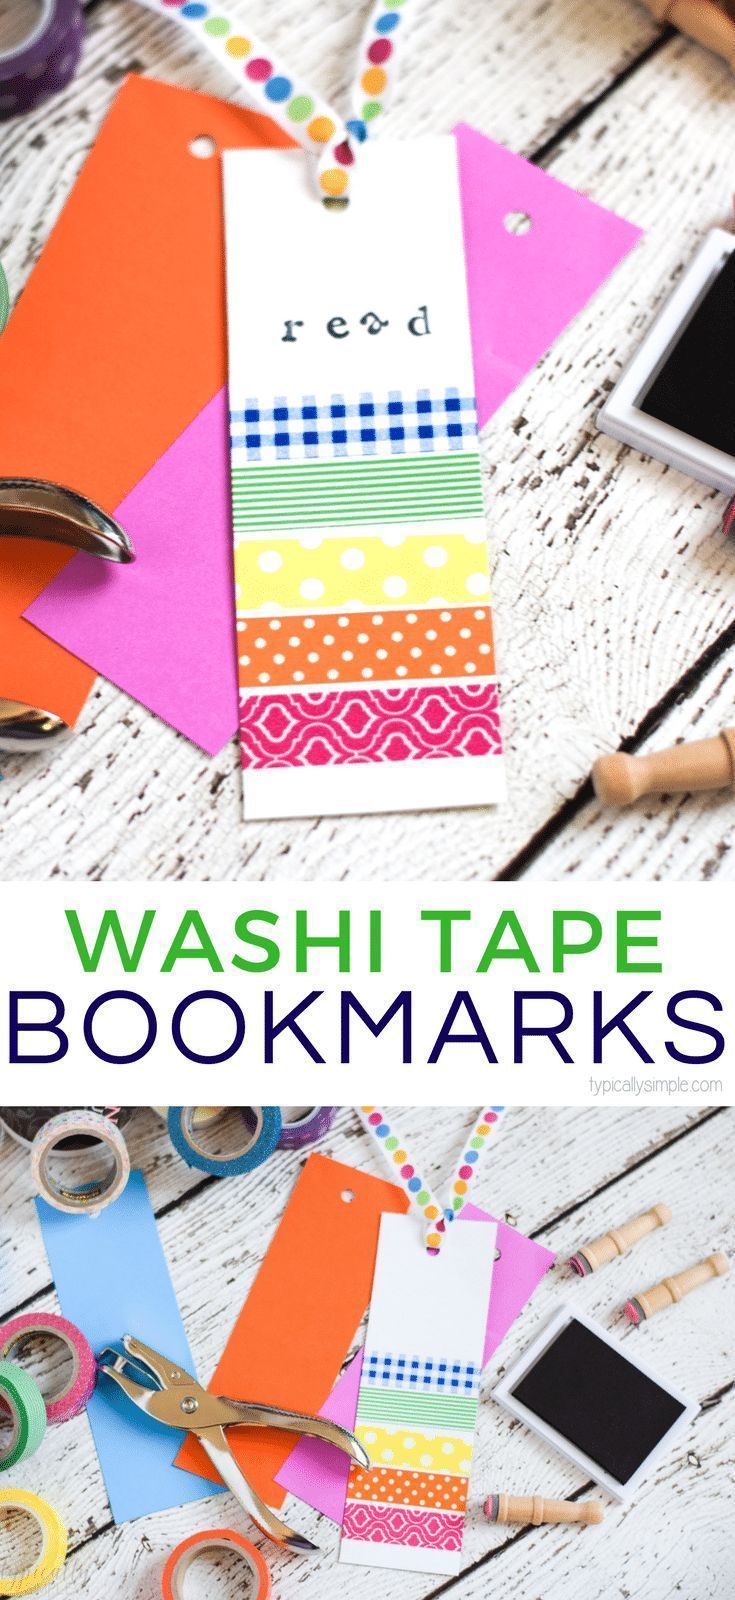 17 diy projects Art washi tape ideas